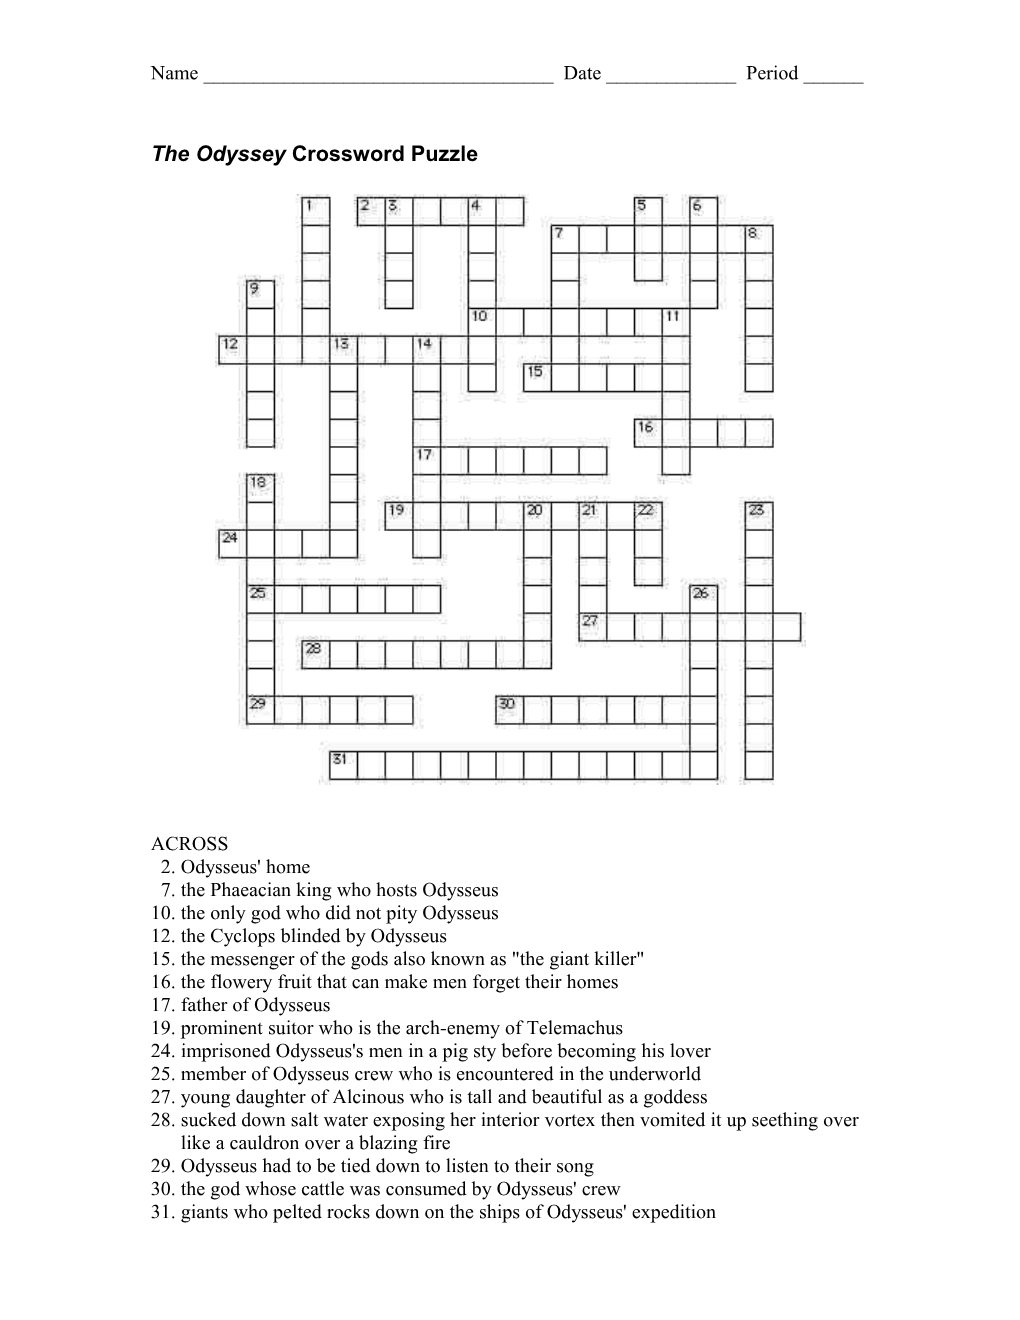 The Odyssey Crossword Puzzle